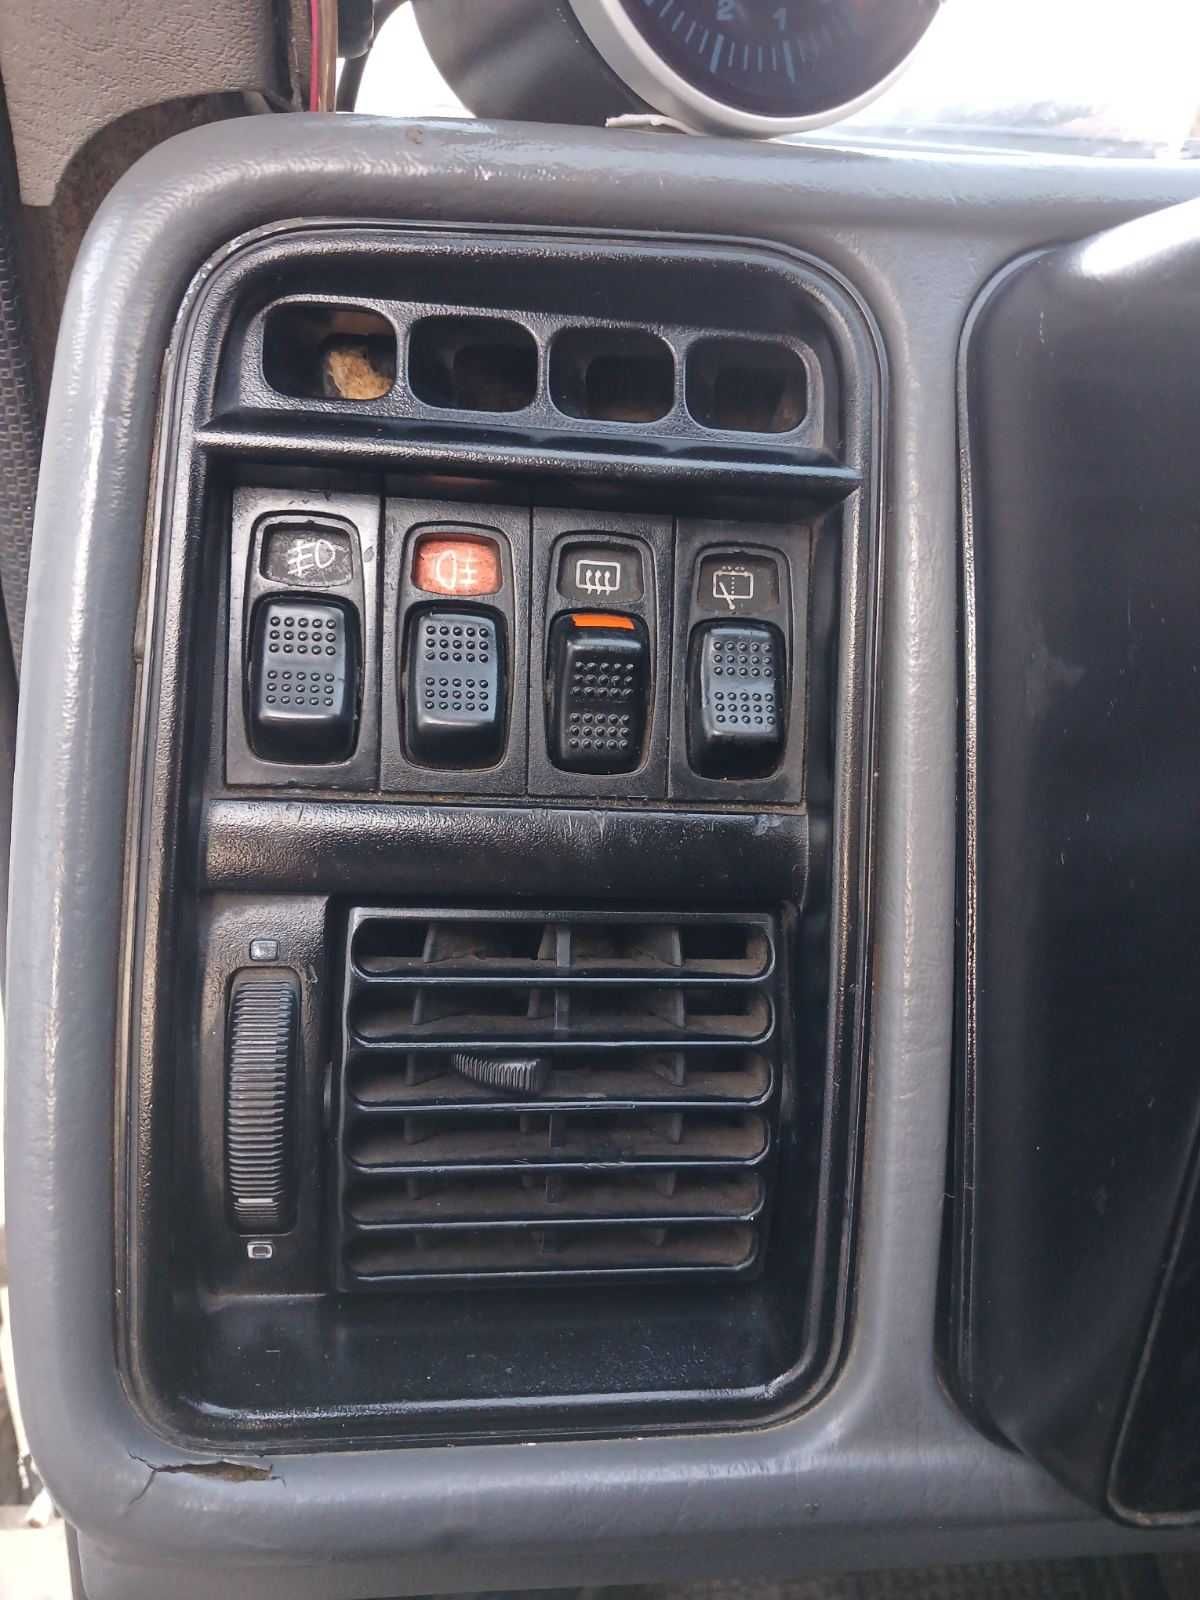 Ford Sierra 1984 року 2,0 л. газ/бензин